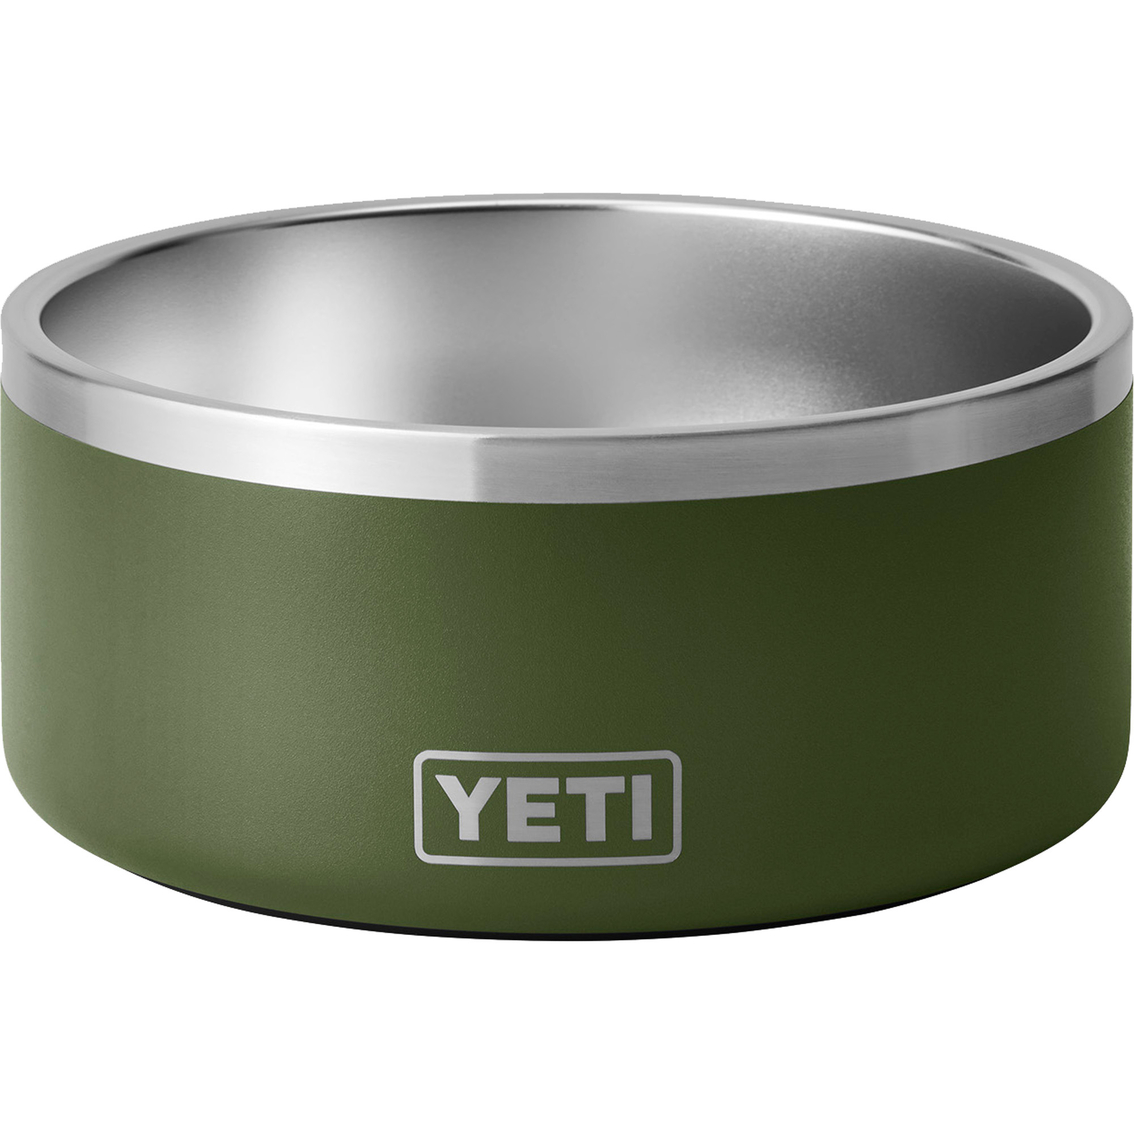 Yeti Boomer 4 Dog Bowl Set of Two